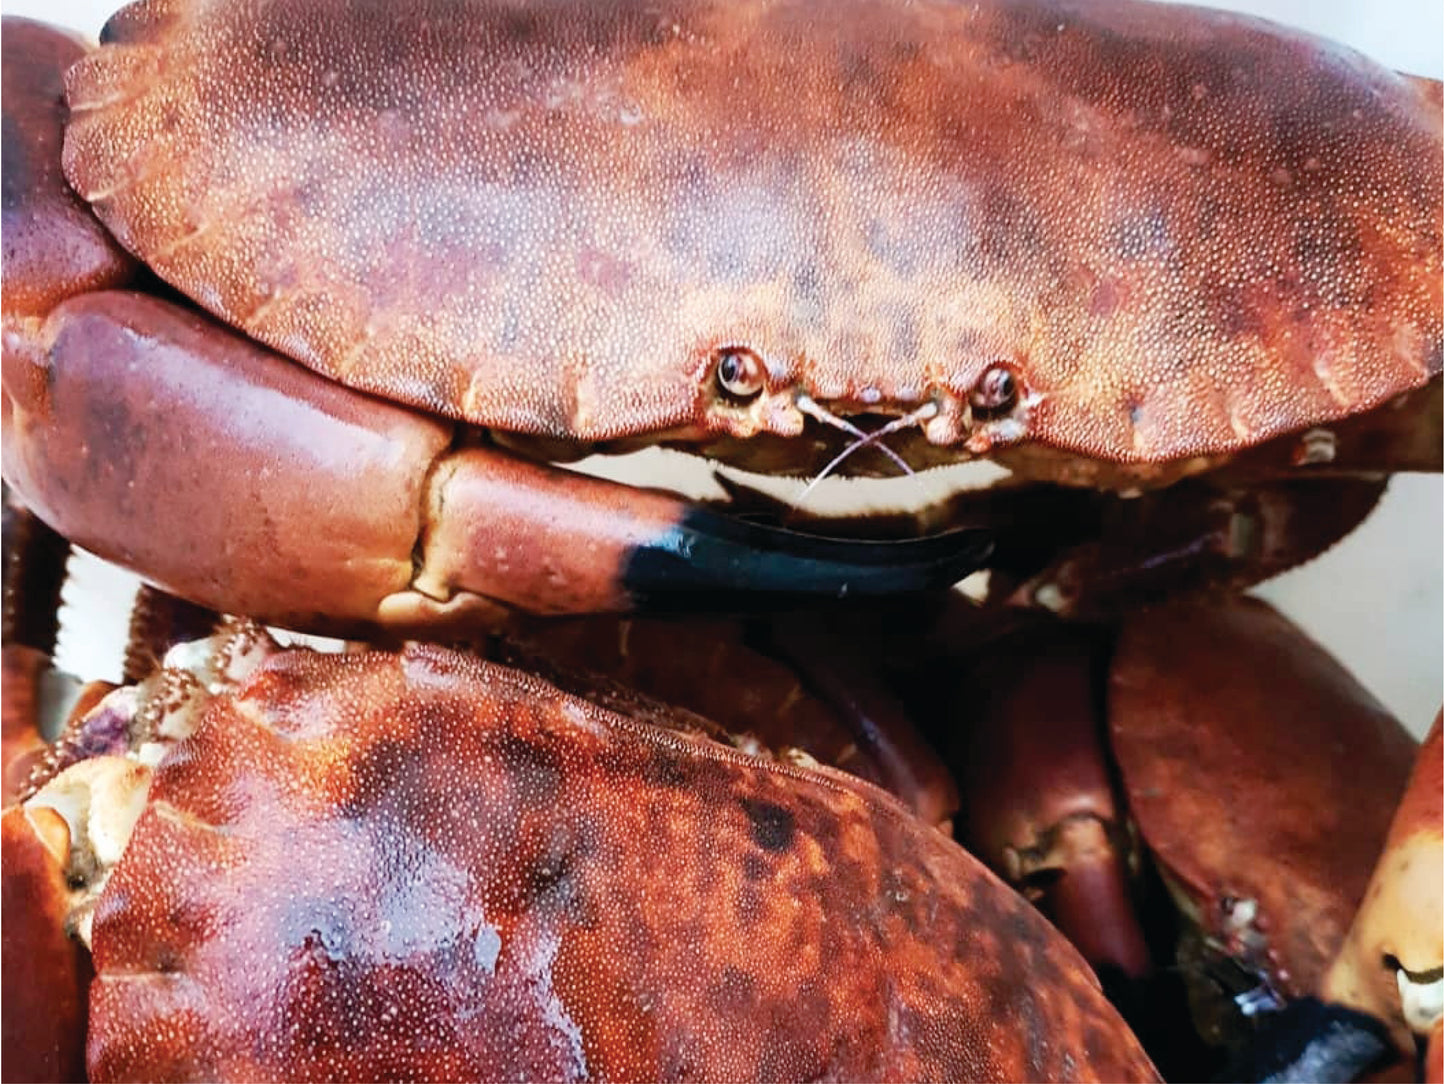 Brown crab meat